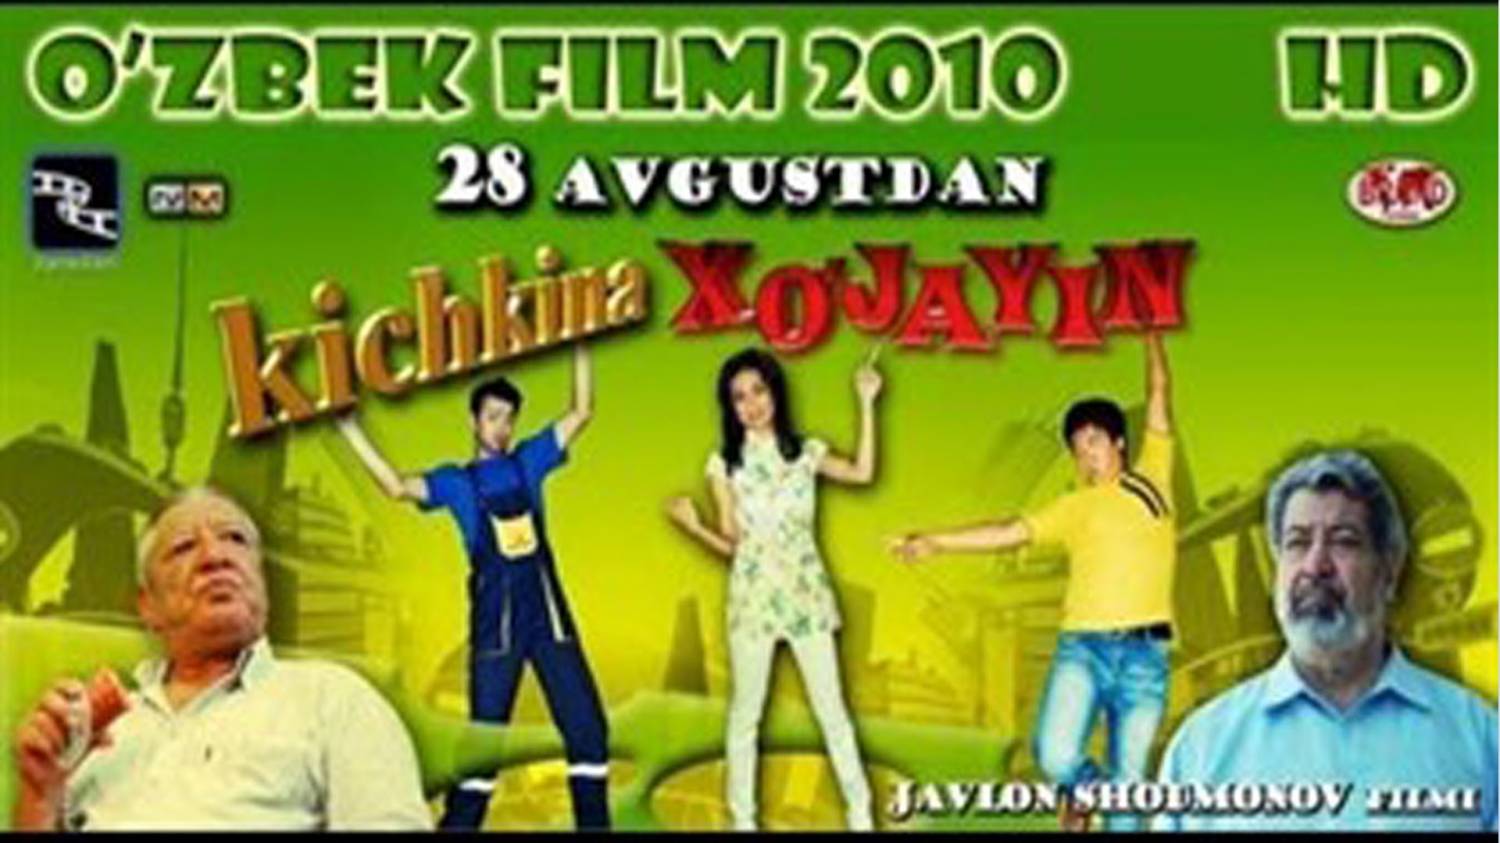 Kichkina Xo'jayin Uzbek Film